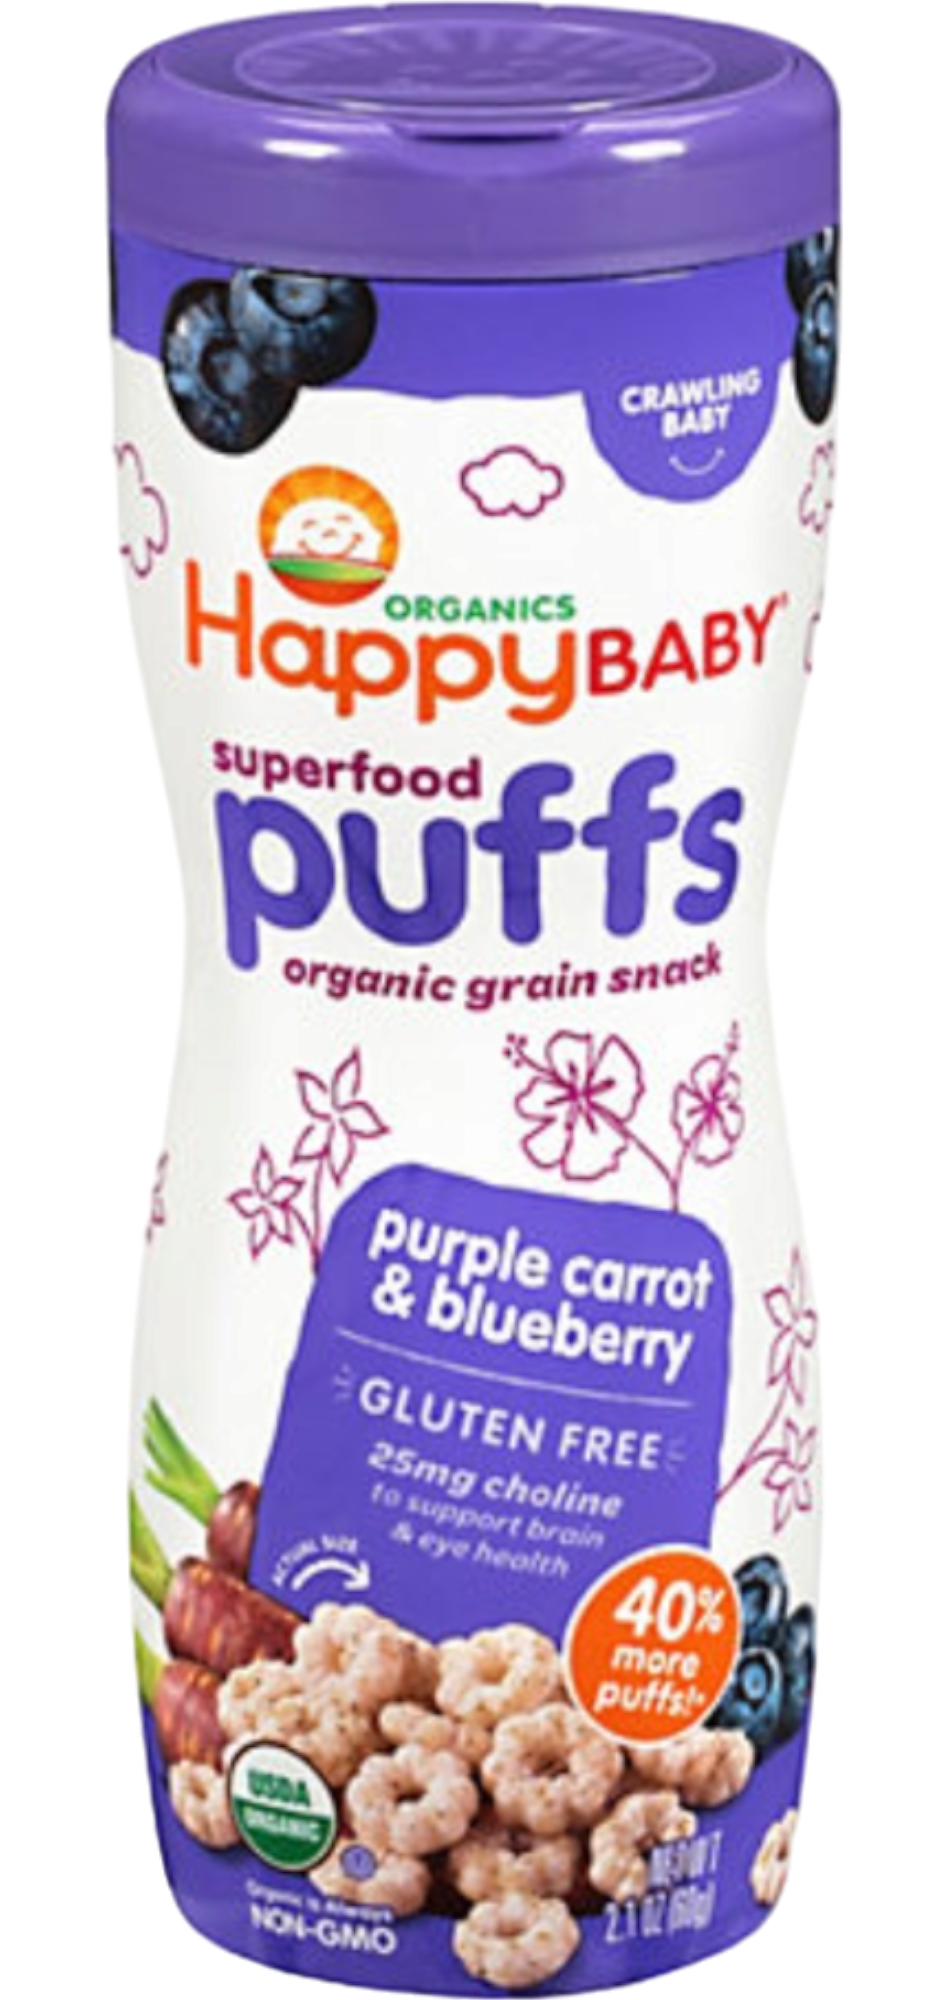 Happybaby Organic Puffs Purple Carrot & Blueberry 60g